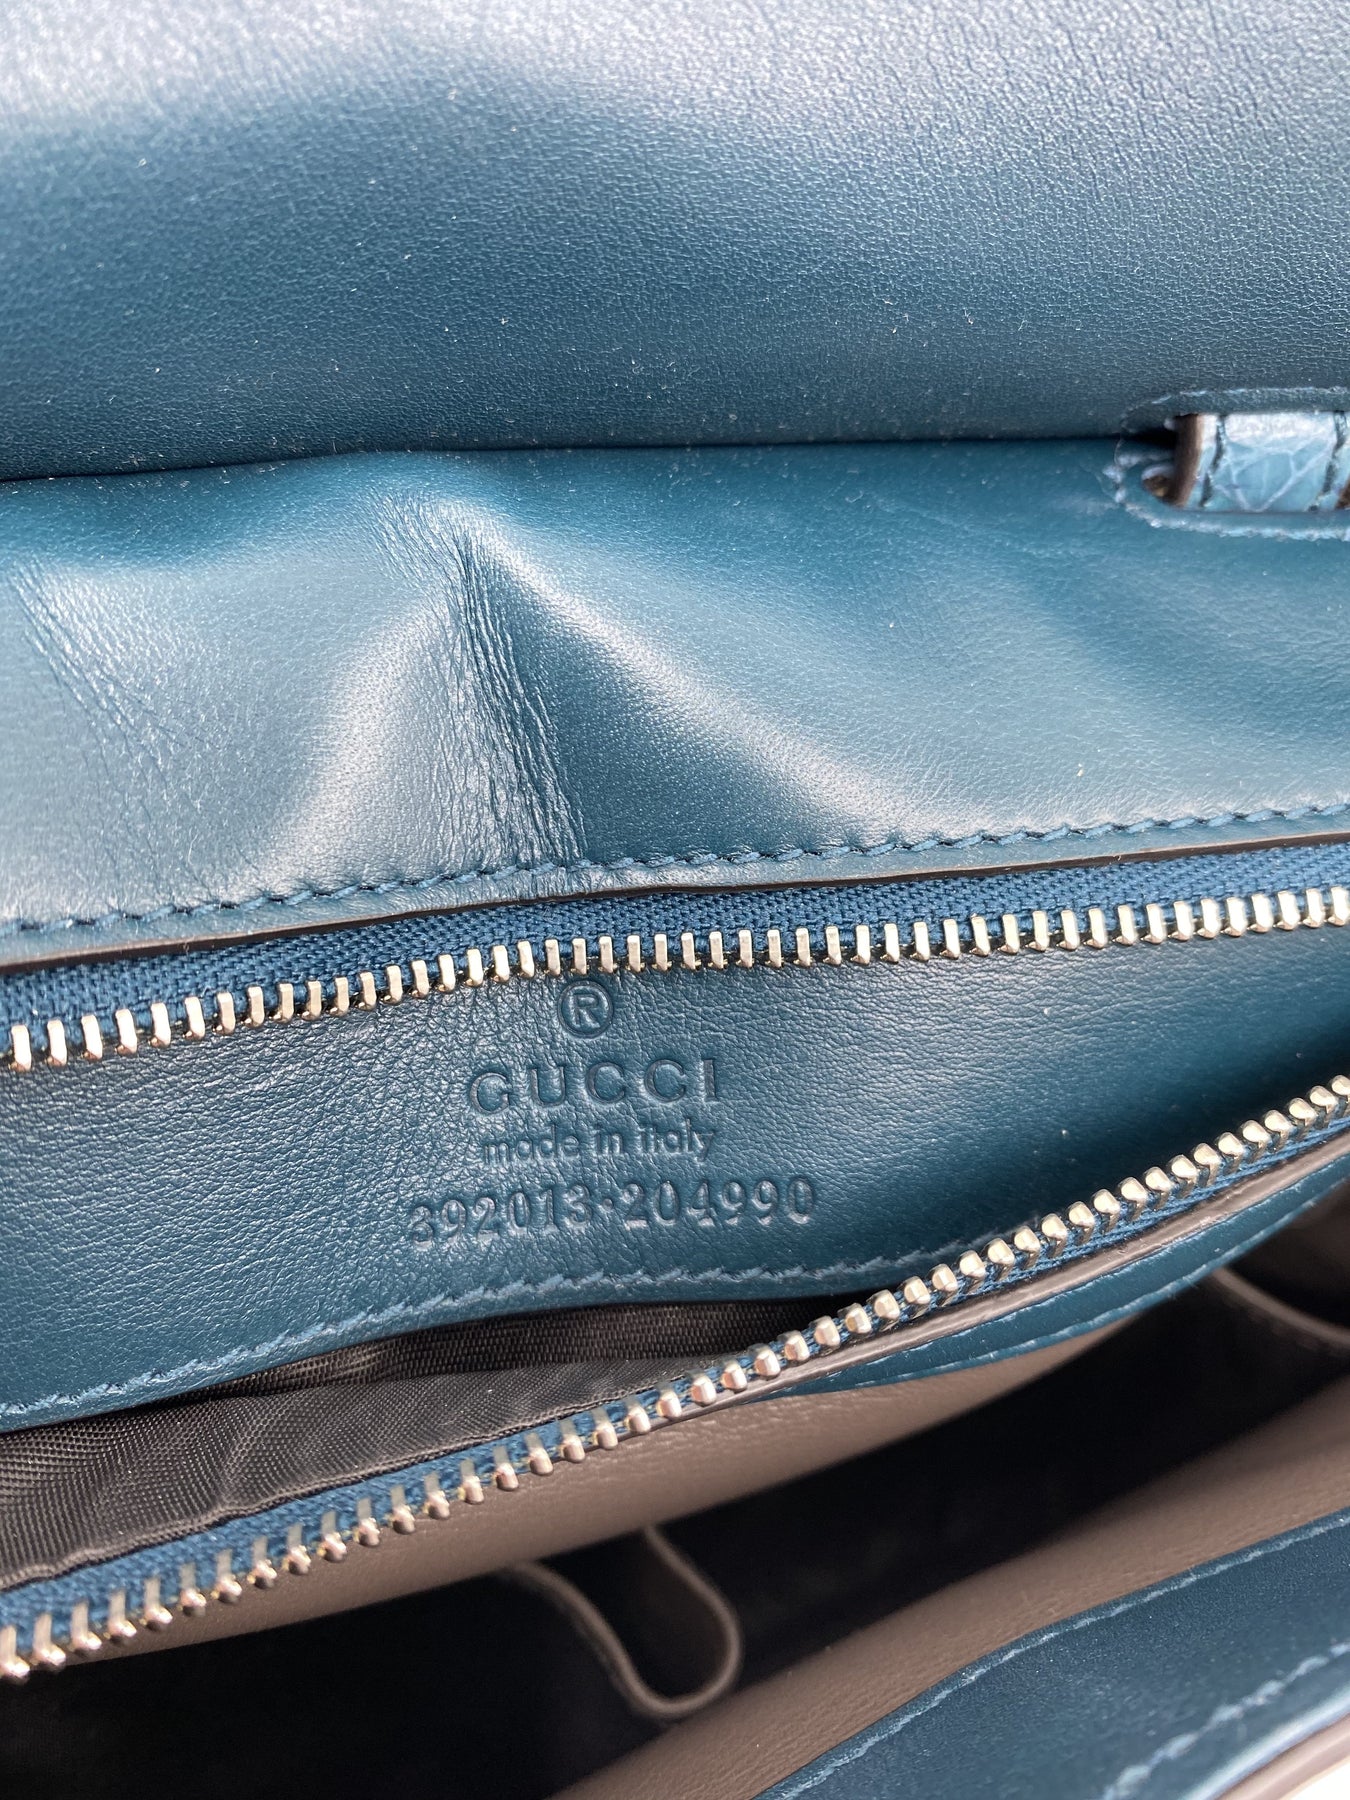 Gucci Blue Thiara Crocodile Top Handle Bag | eBay